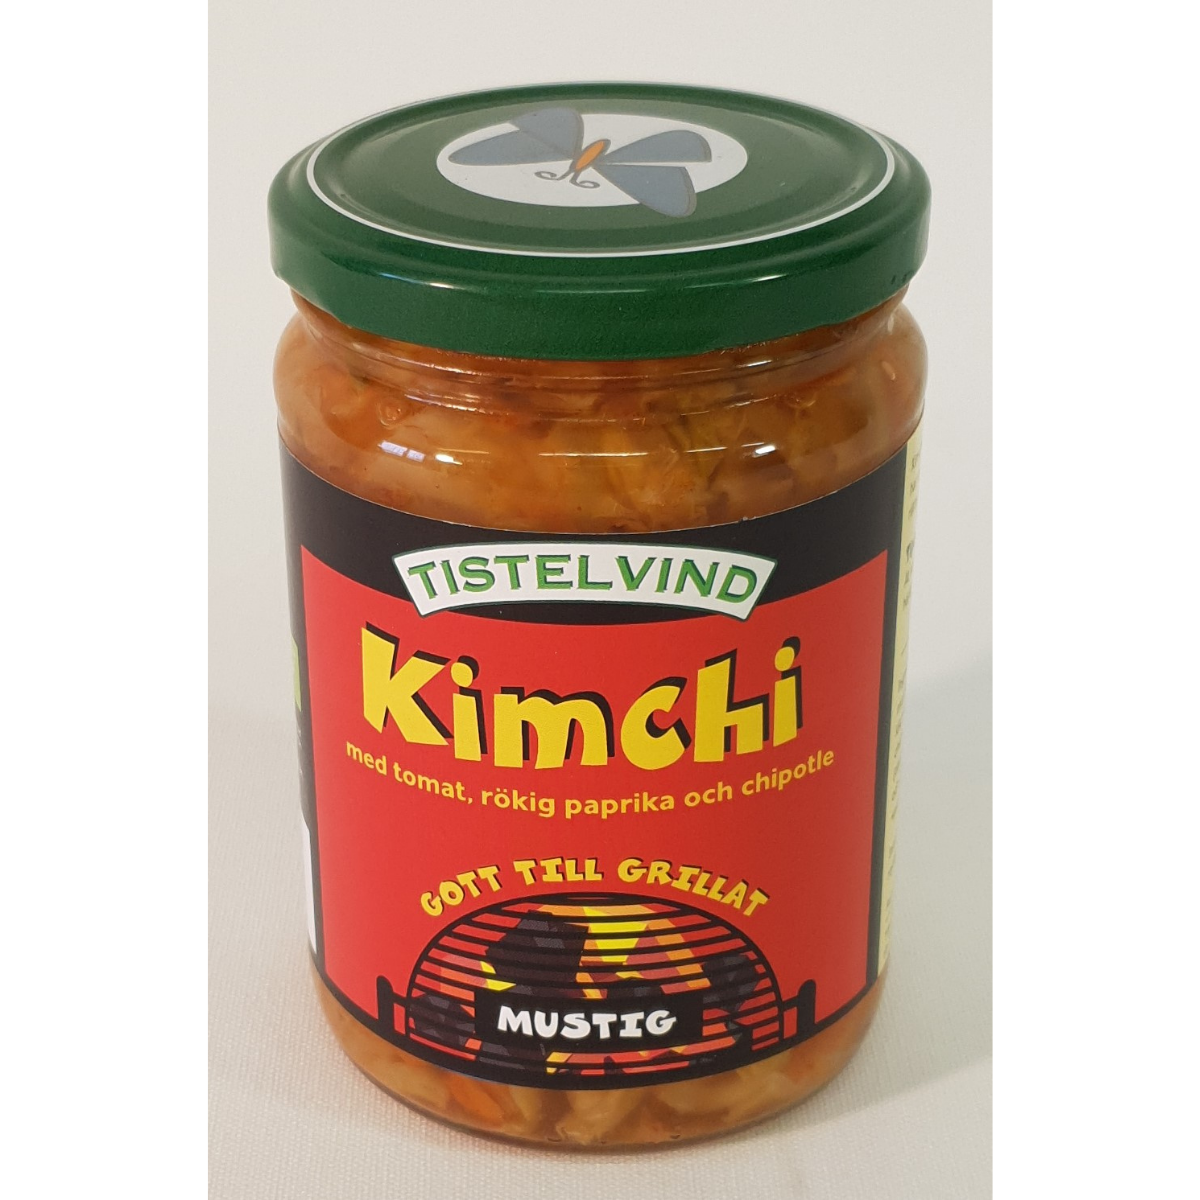 Tistelvind's Kimchi Grill, mit Tomaten und geräuchertem Paprika